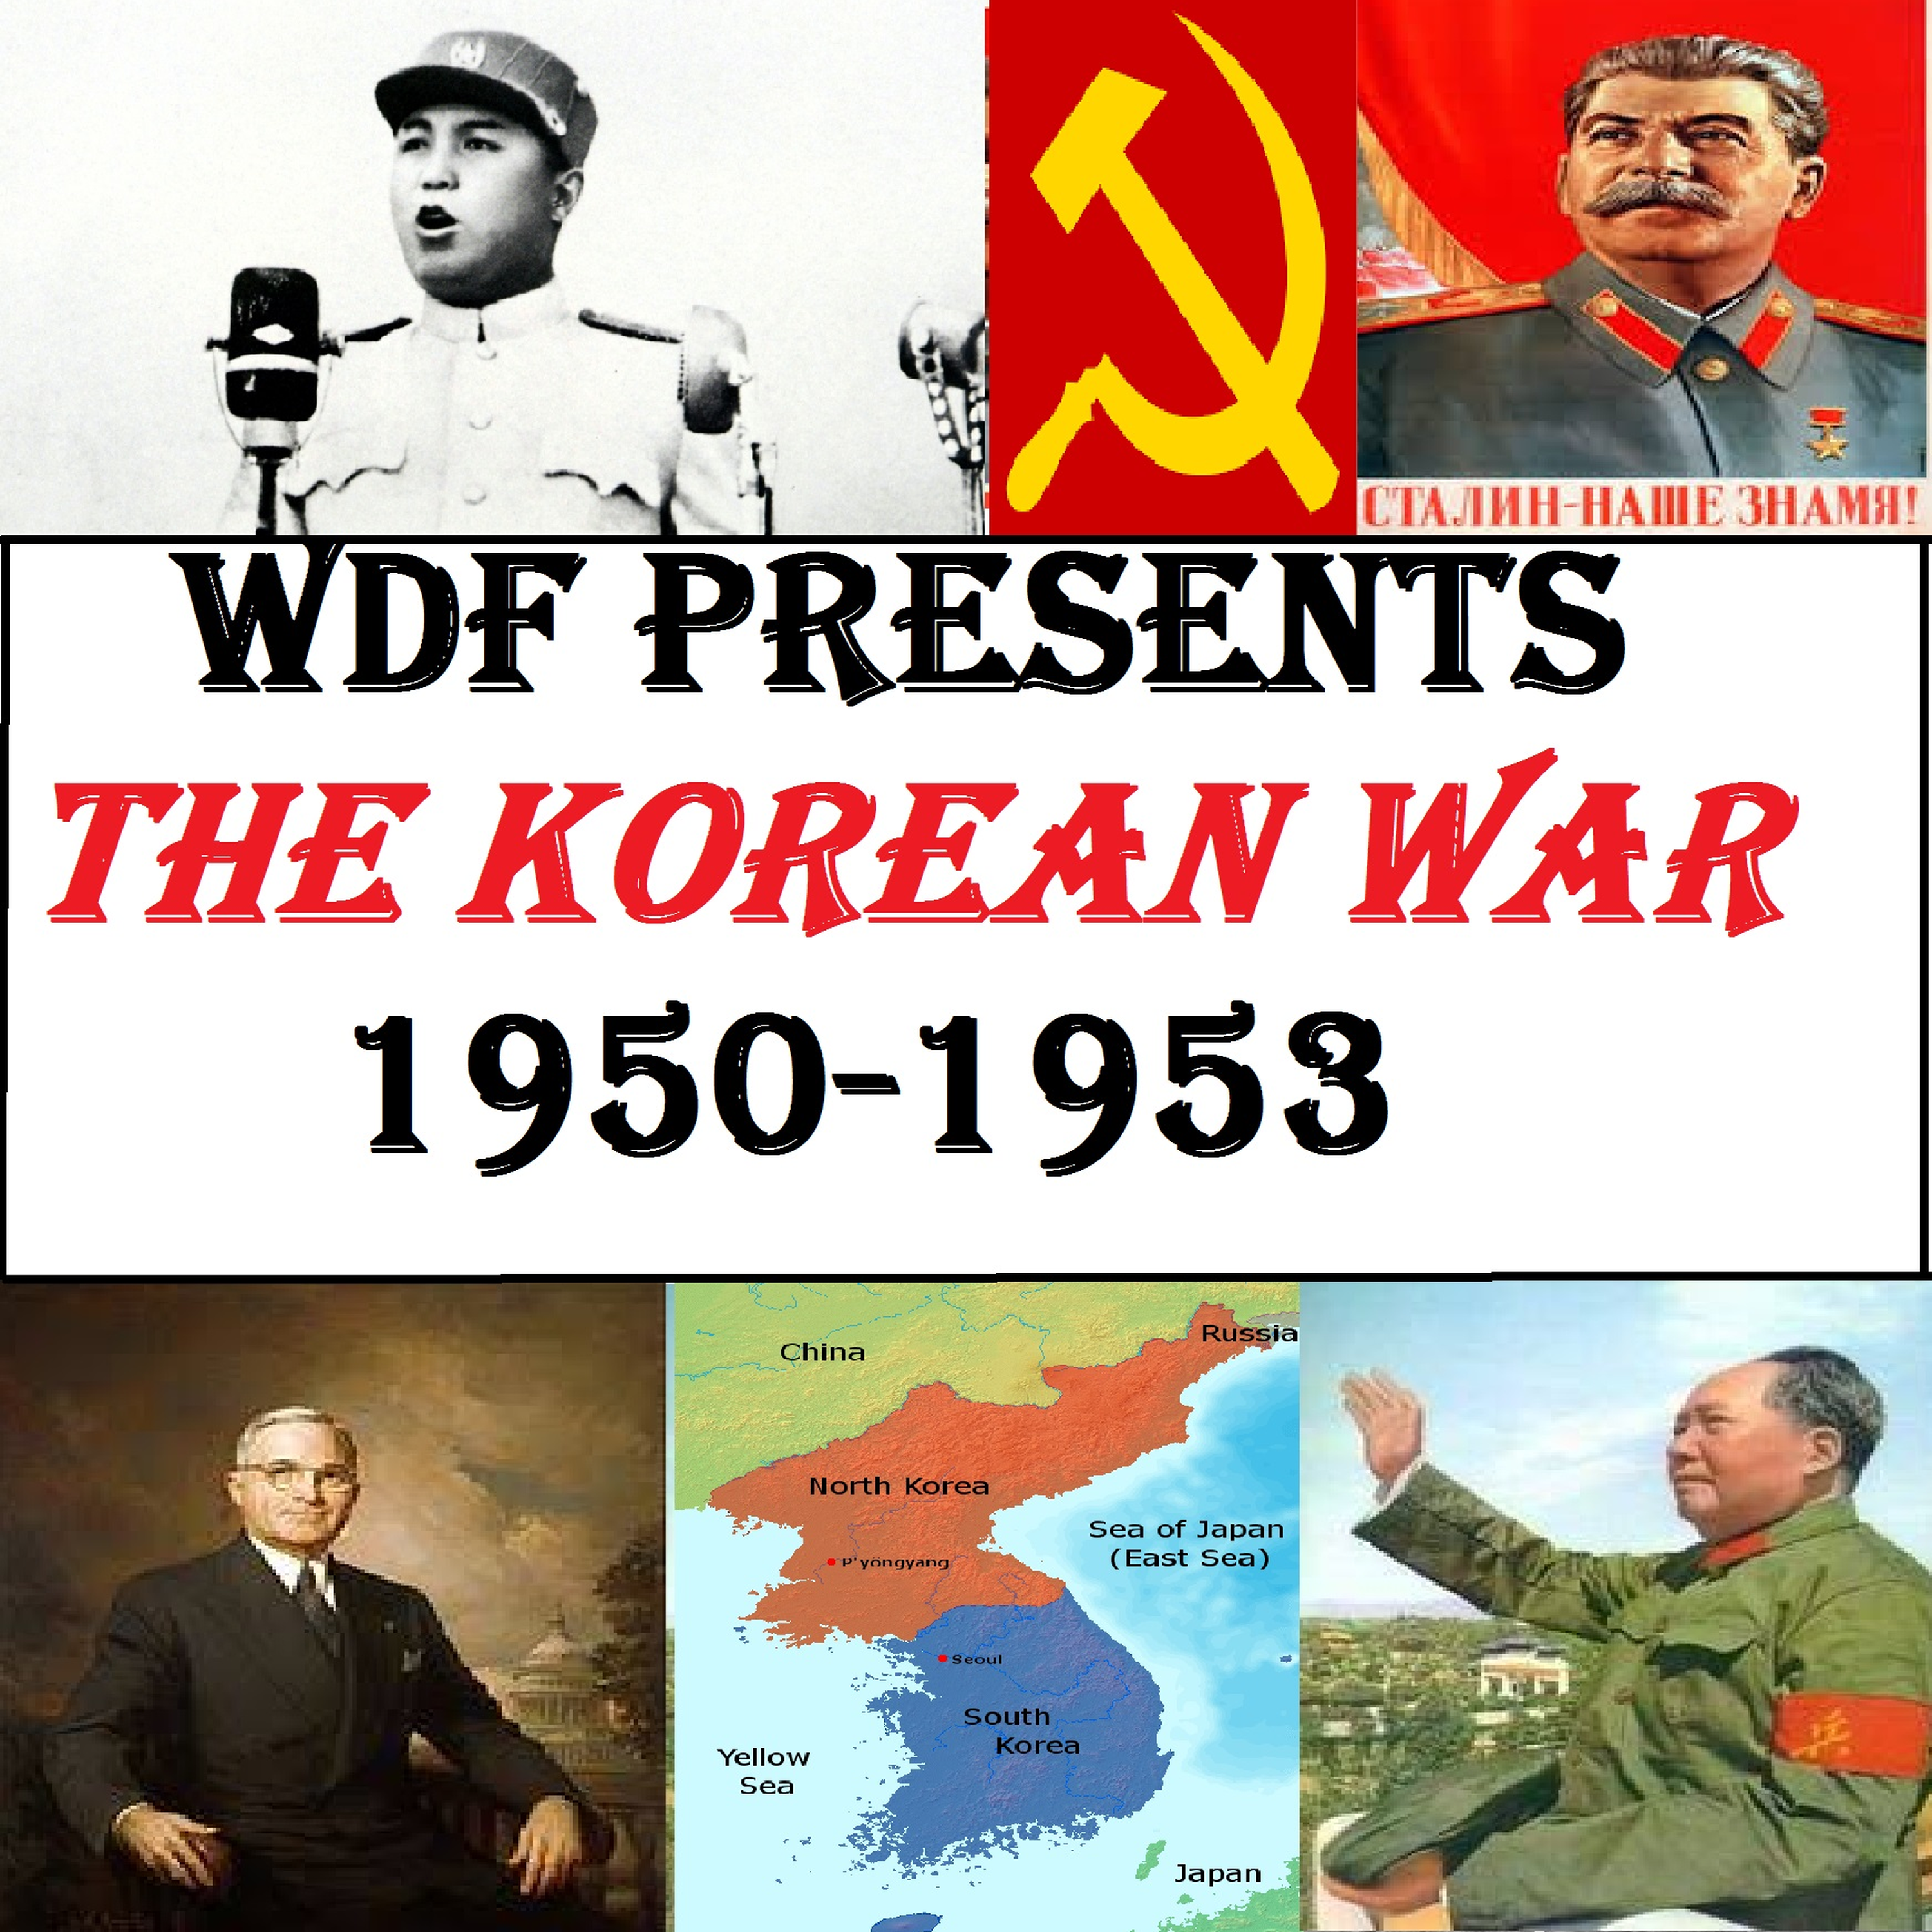 Korean War: Conclusion